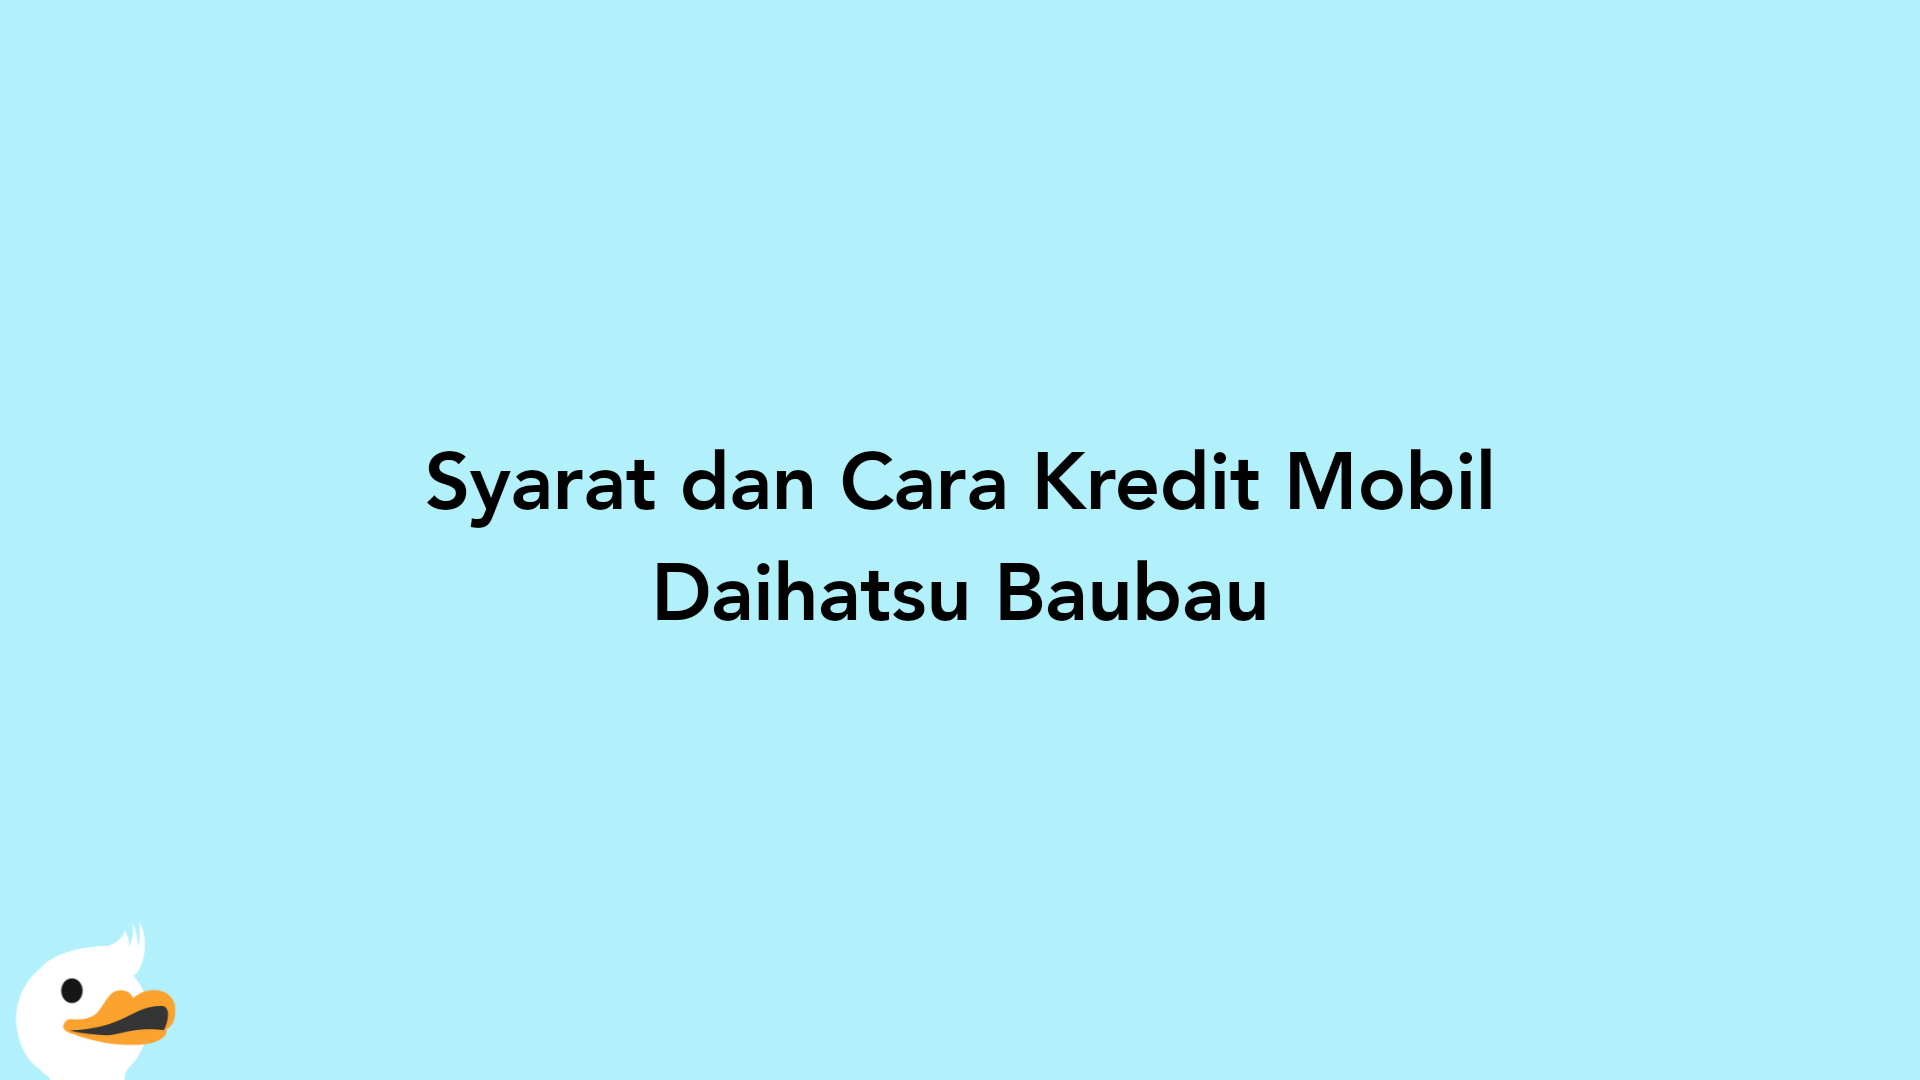 Syarat dan Cara Kredit Mobil Daihatsu Baubau